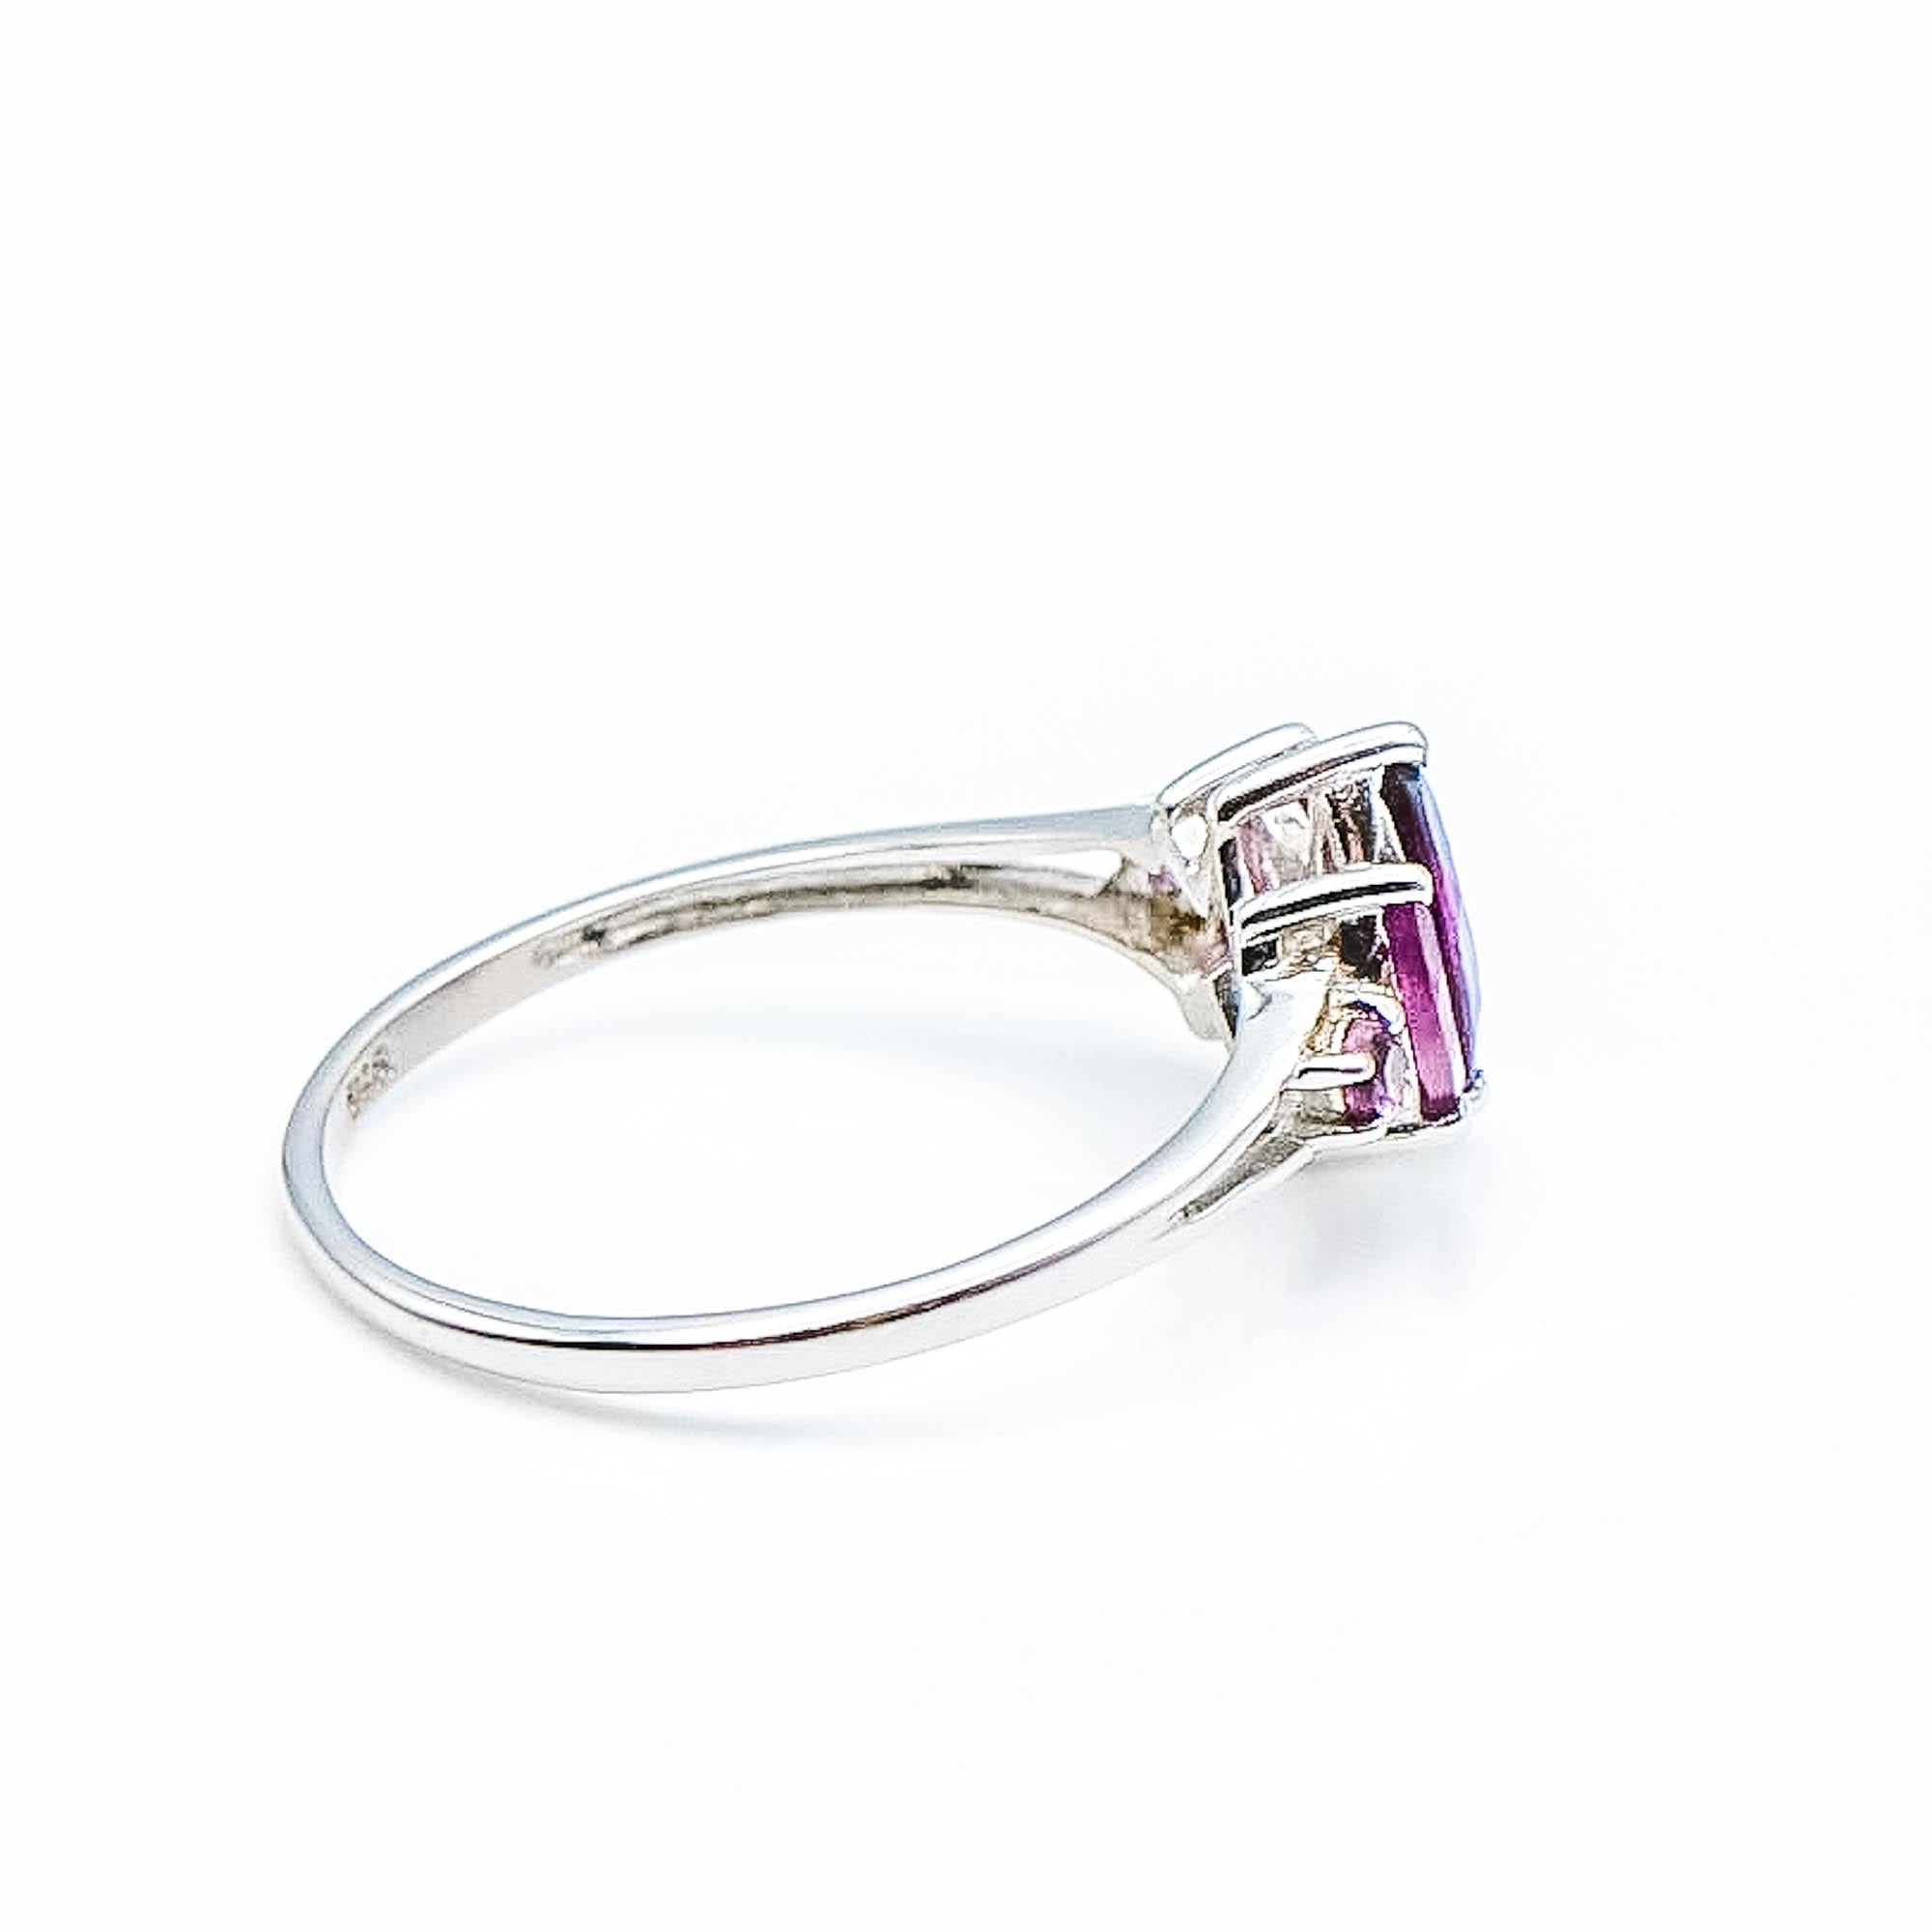 Sterling Silver Garnet Ring Size 7.75